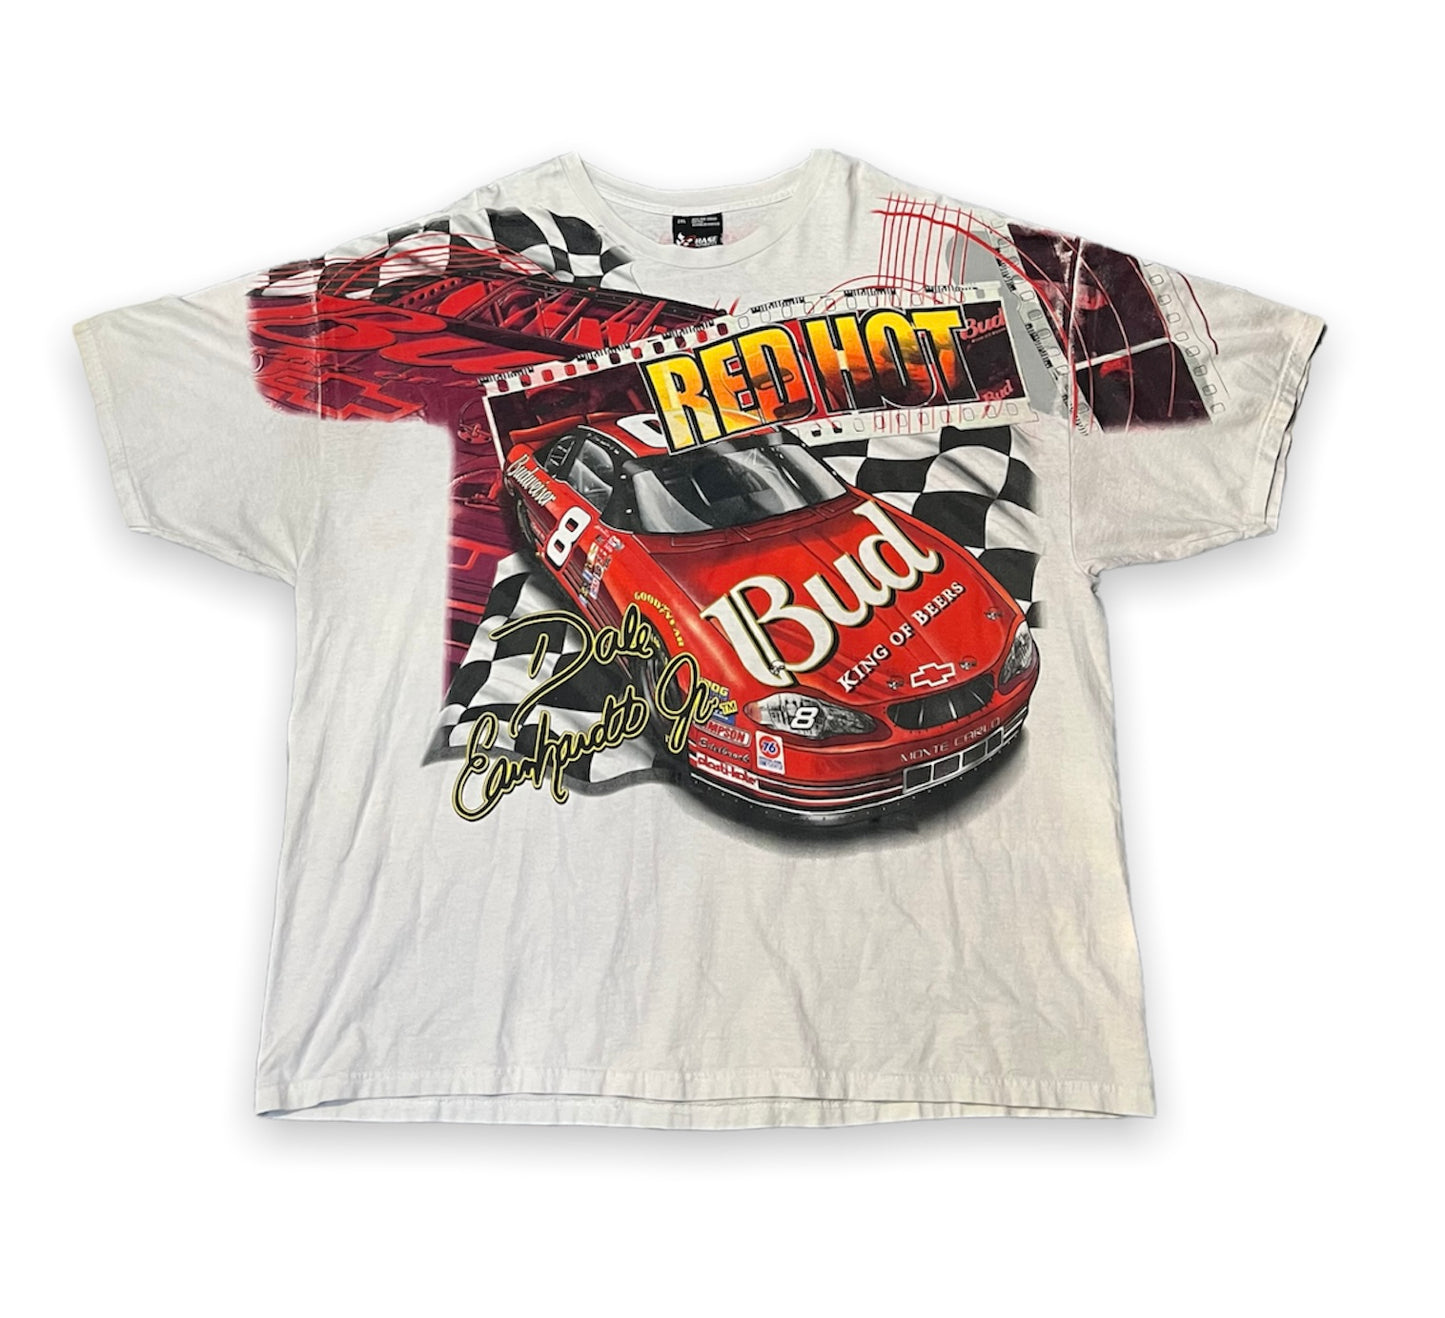 Dale Earnhardt Jr Budweiser “Red Hot” NASCAR All Over Print Tee